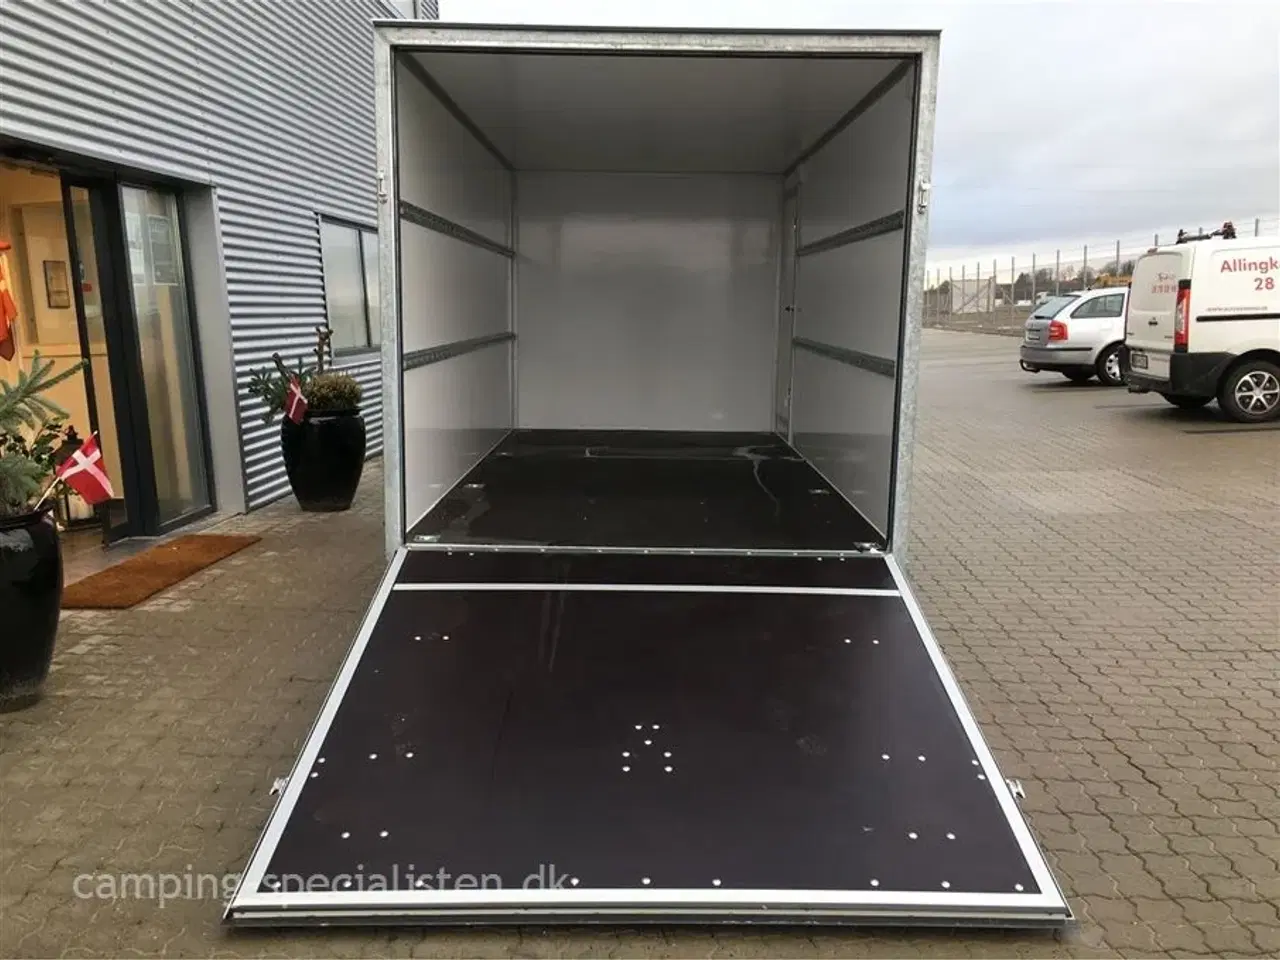 Billede 4 - 2024 - Selandia Cargotrailer Stor 2541 HT 2500 kg    Ny Cargo trailer 2x4 meter Model 2024  Camping-Specialisten.dk Silkeborg og Arhus